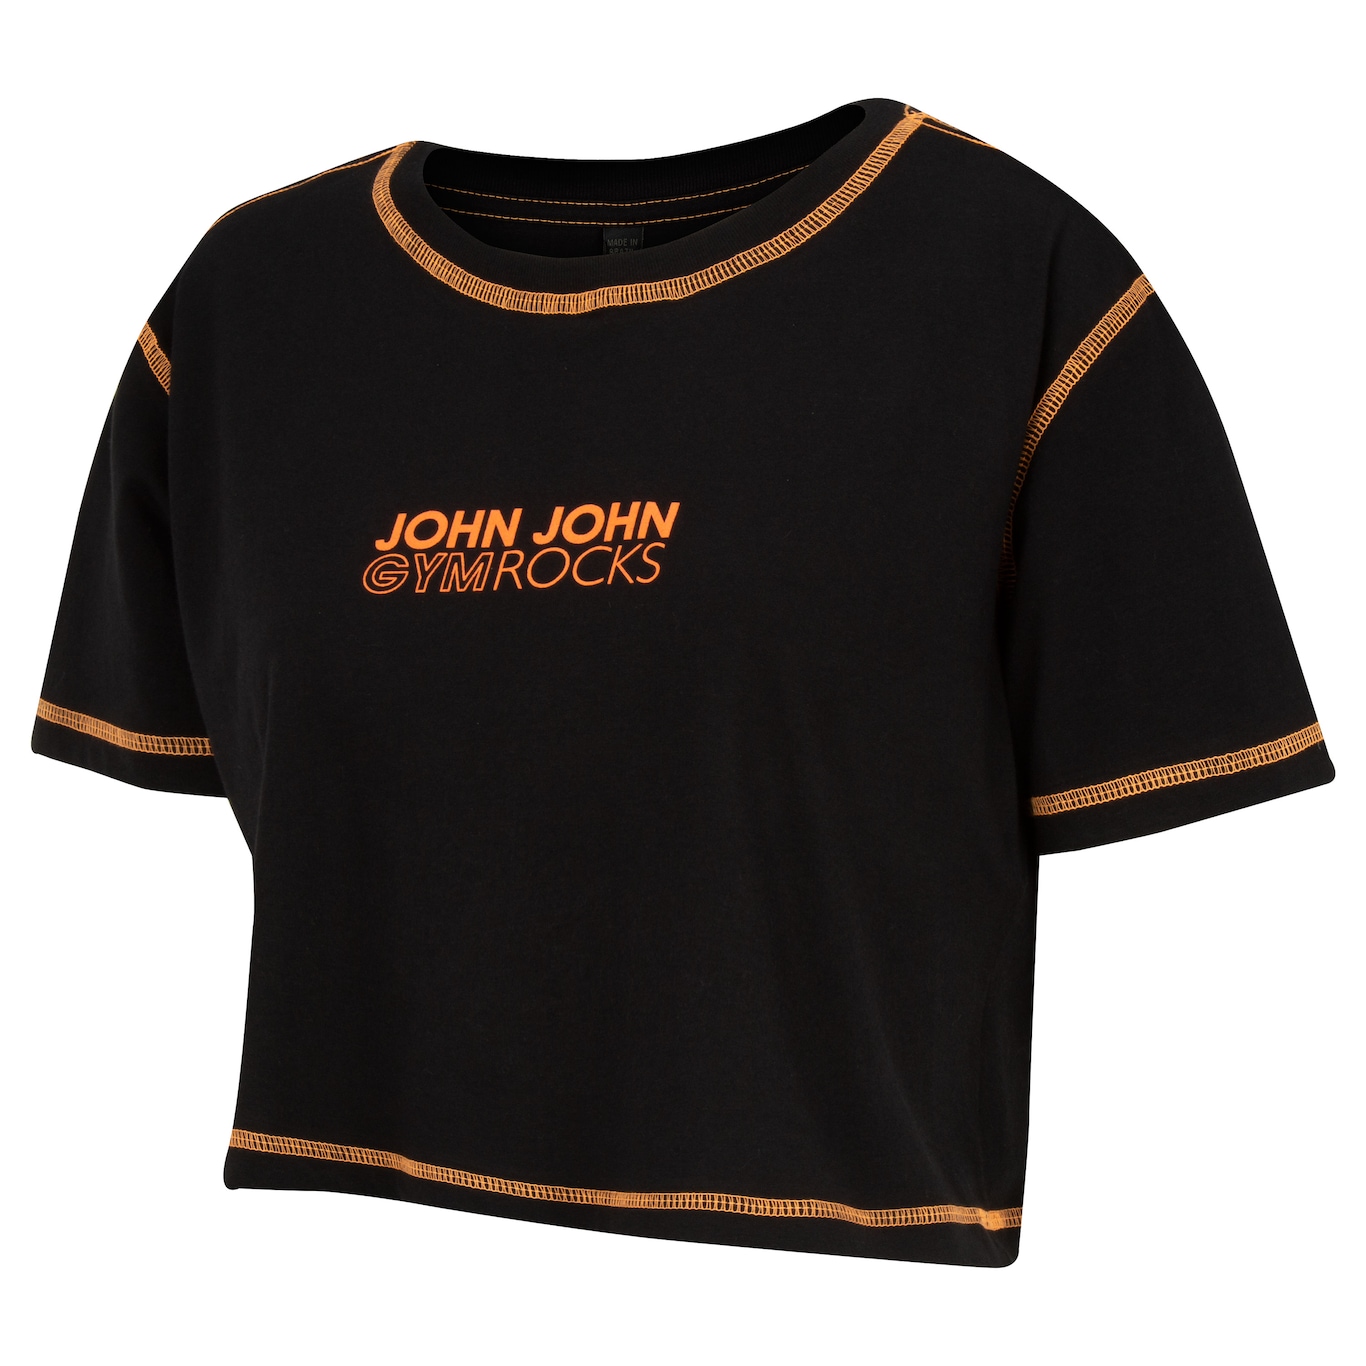 Camiseta Cropped Celebrate John John Feminina - John John